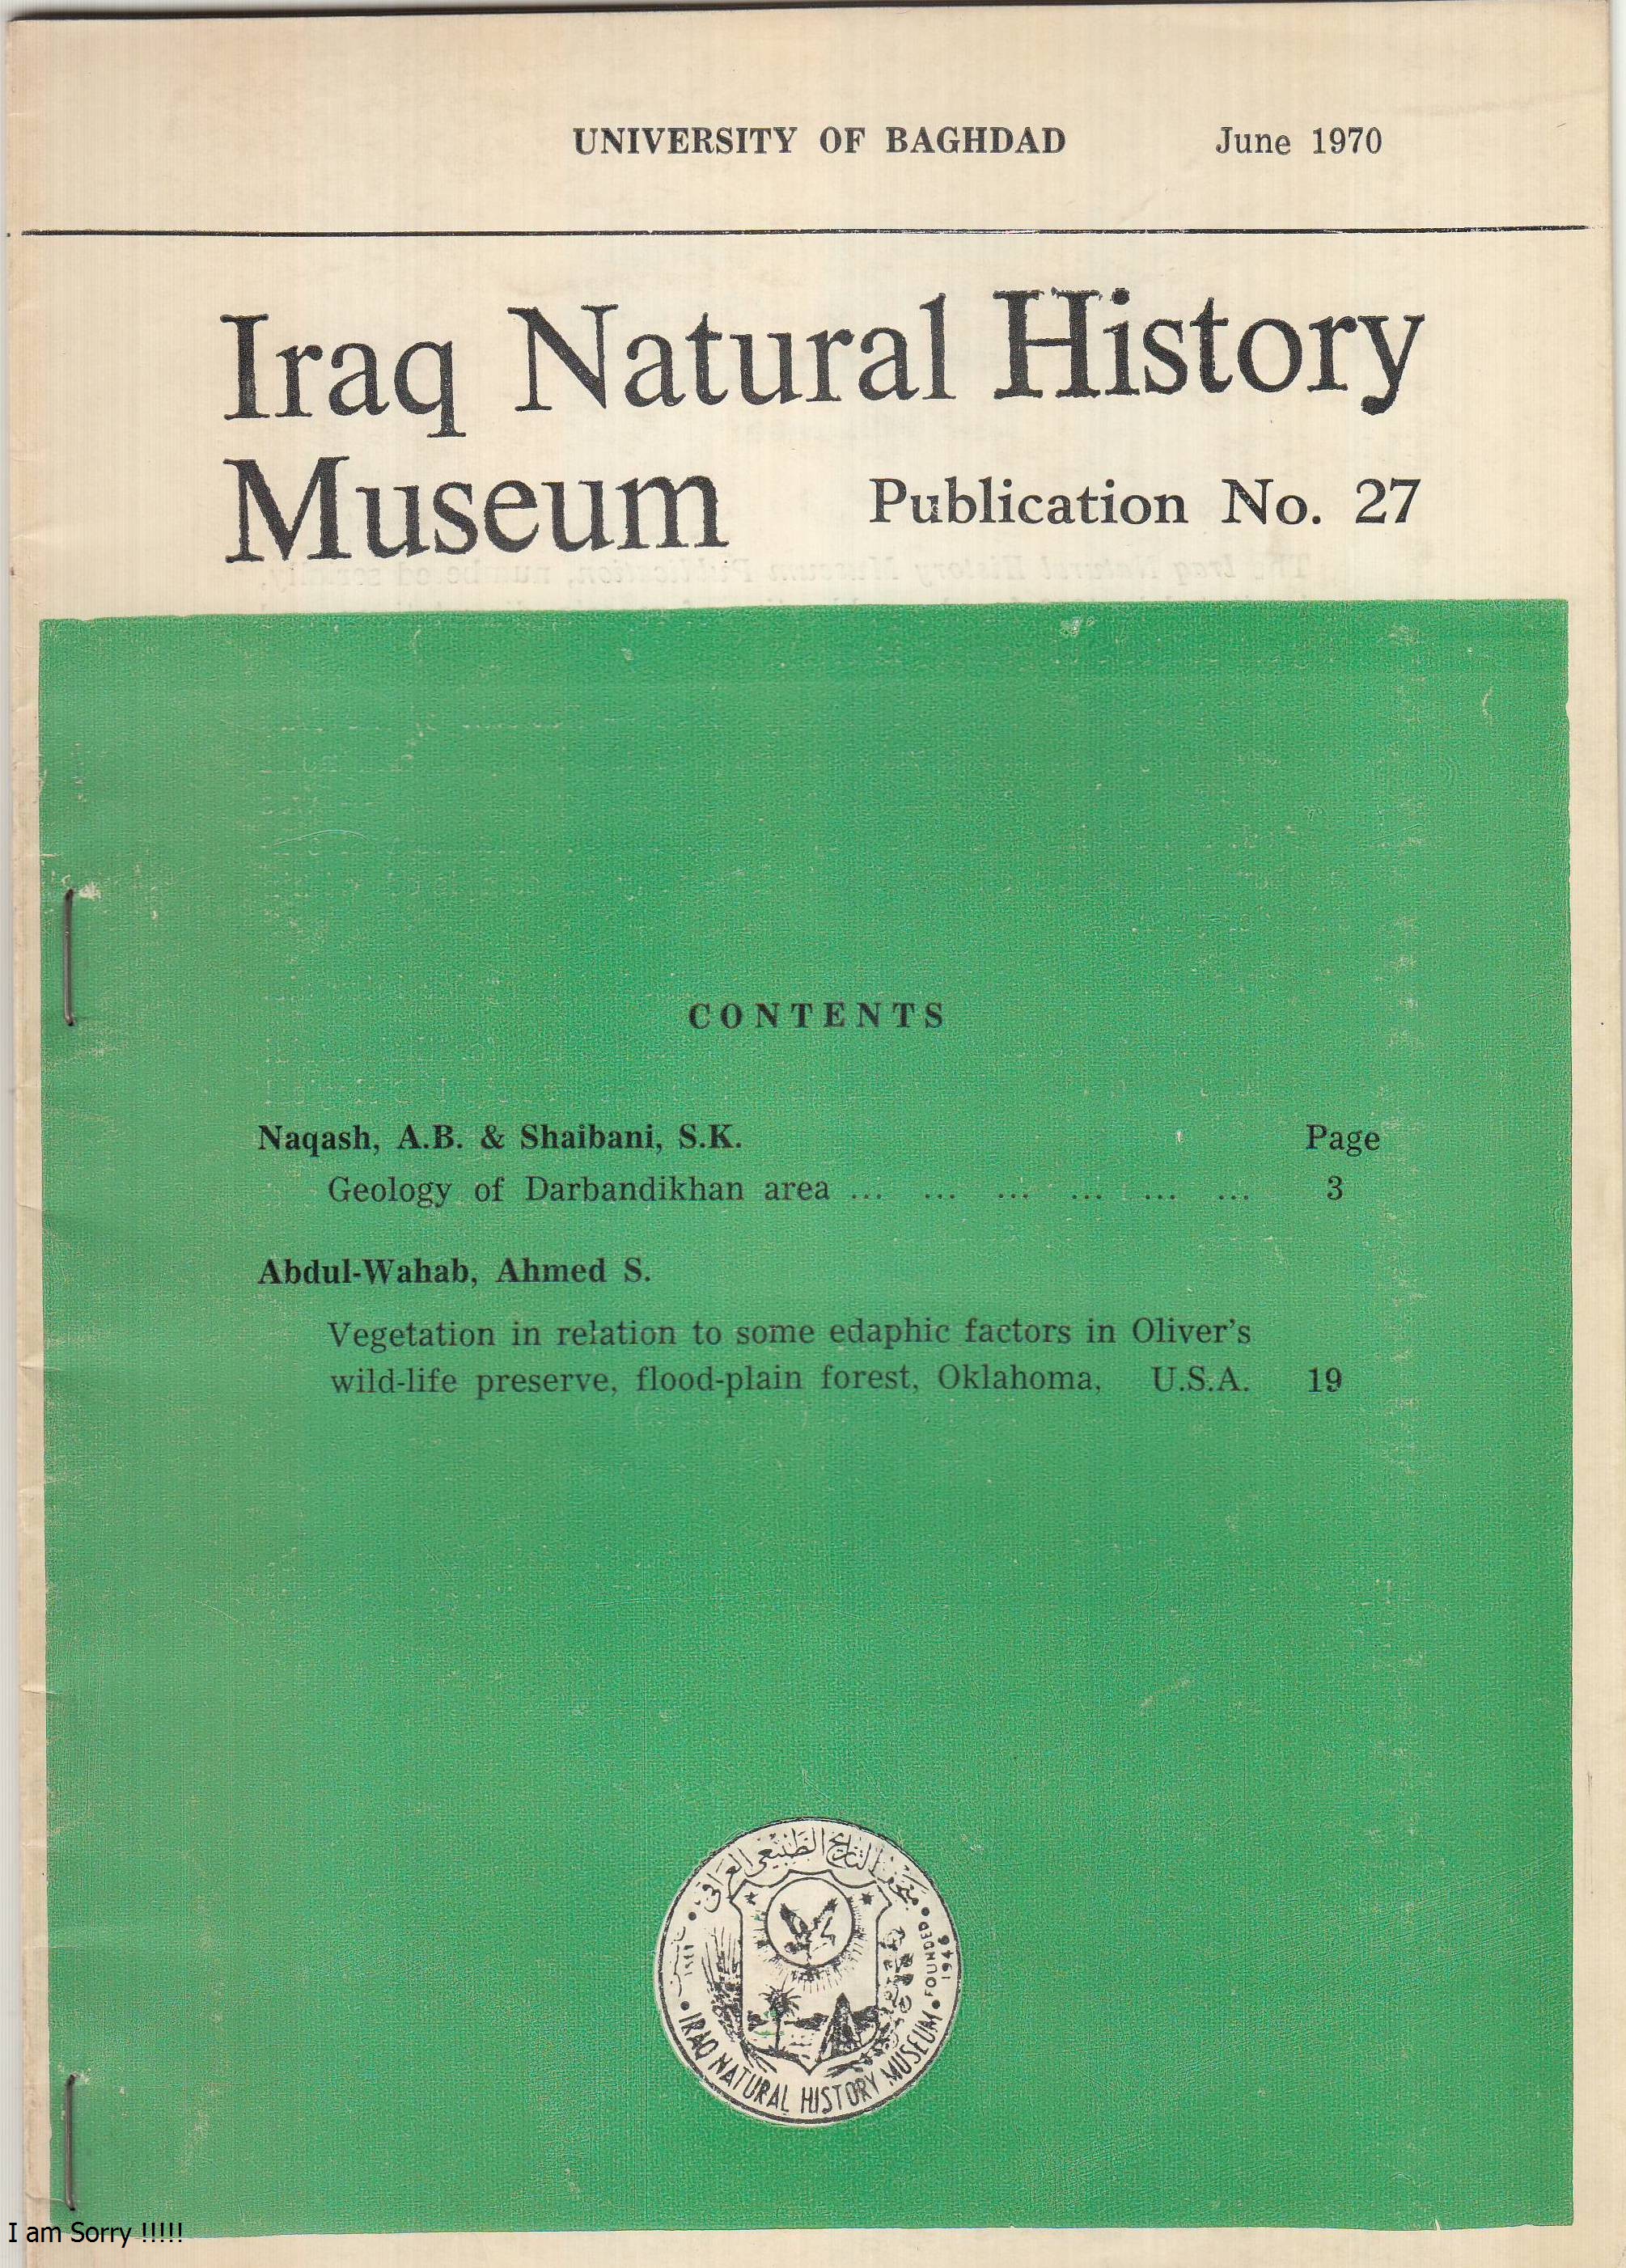 					View No. 27 (1970):  Geology of  Darbandikhan Area by Naqash,A.B.&Shaibani, S.K. Iraq Nat.Hist. Mus, Baghdad, Iraq, p; 3           
				